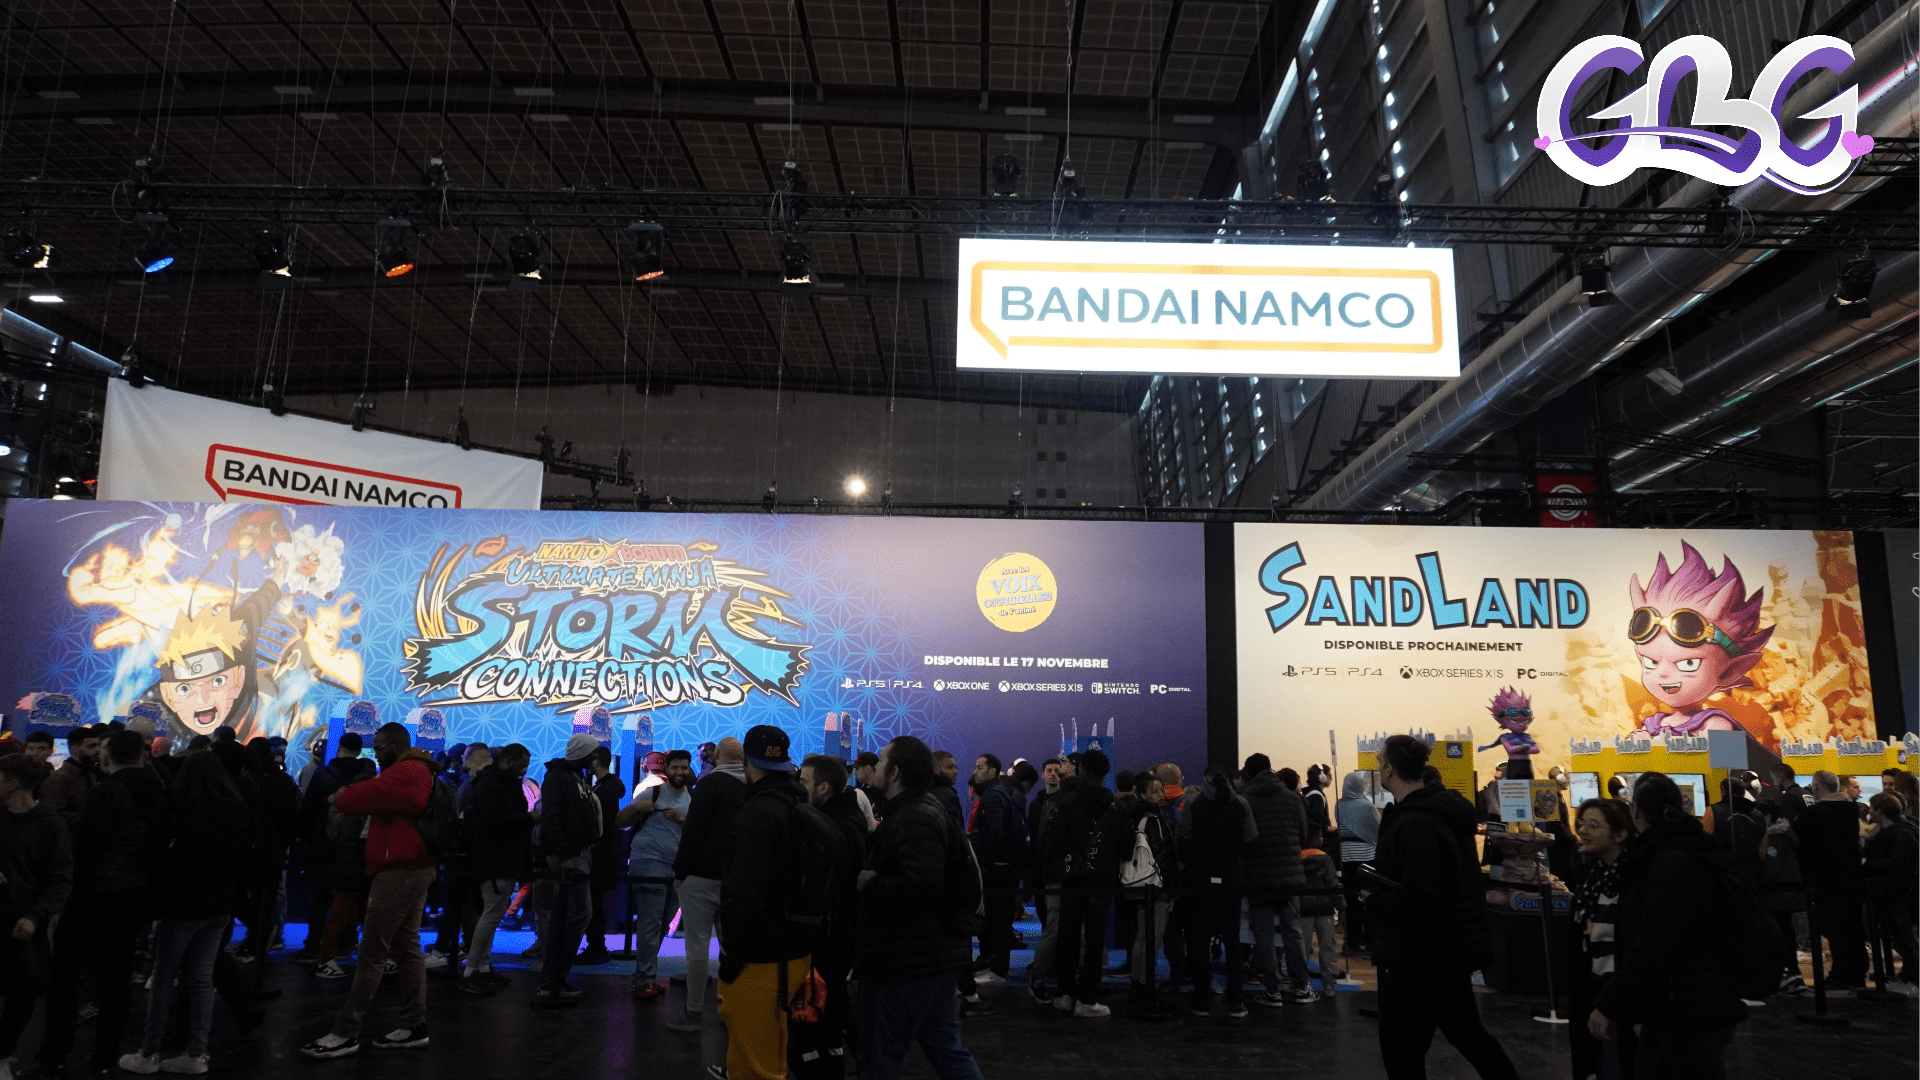 Le stand "Bandai Namco"